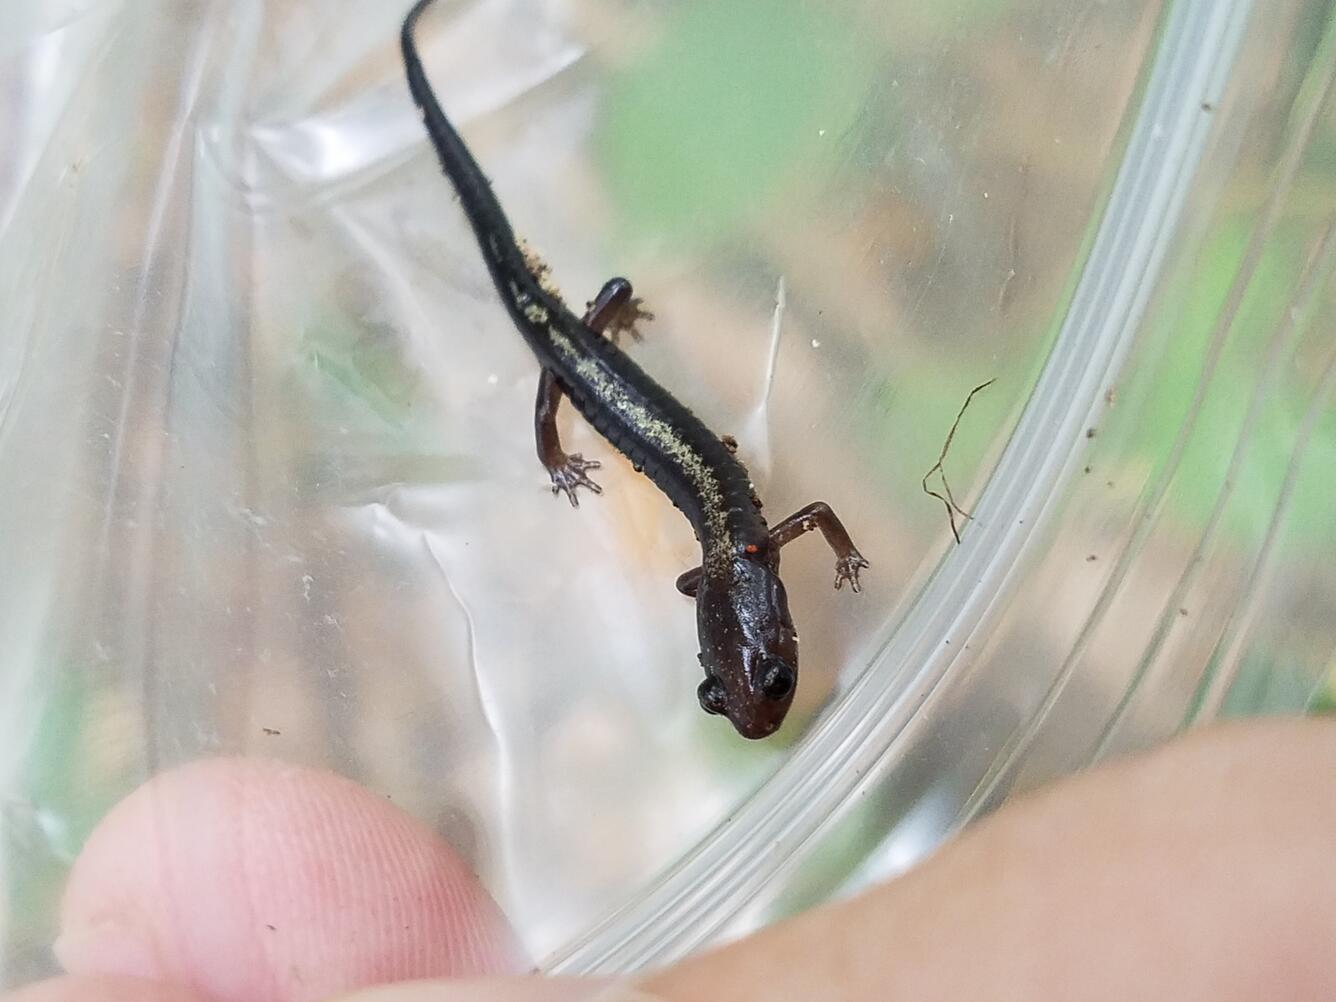 A small brown Shenandoah salamander inside of a plastic bag